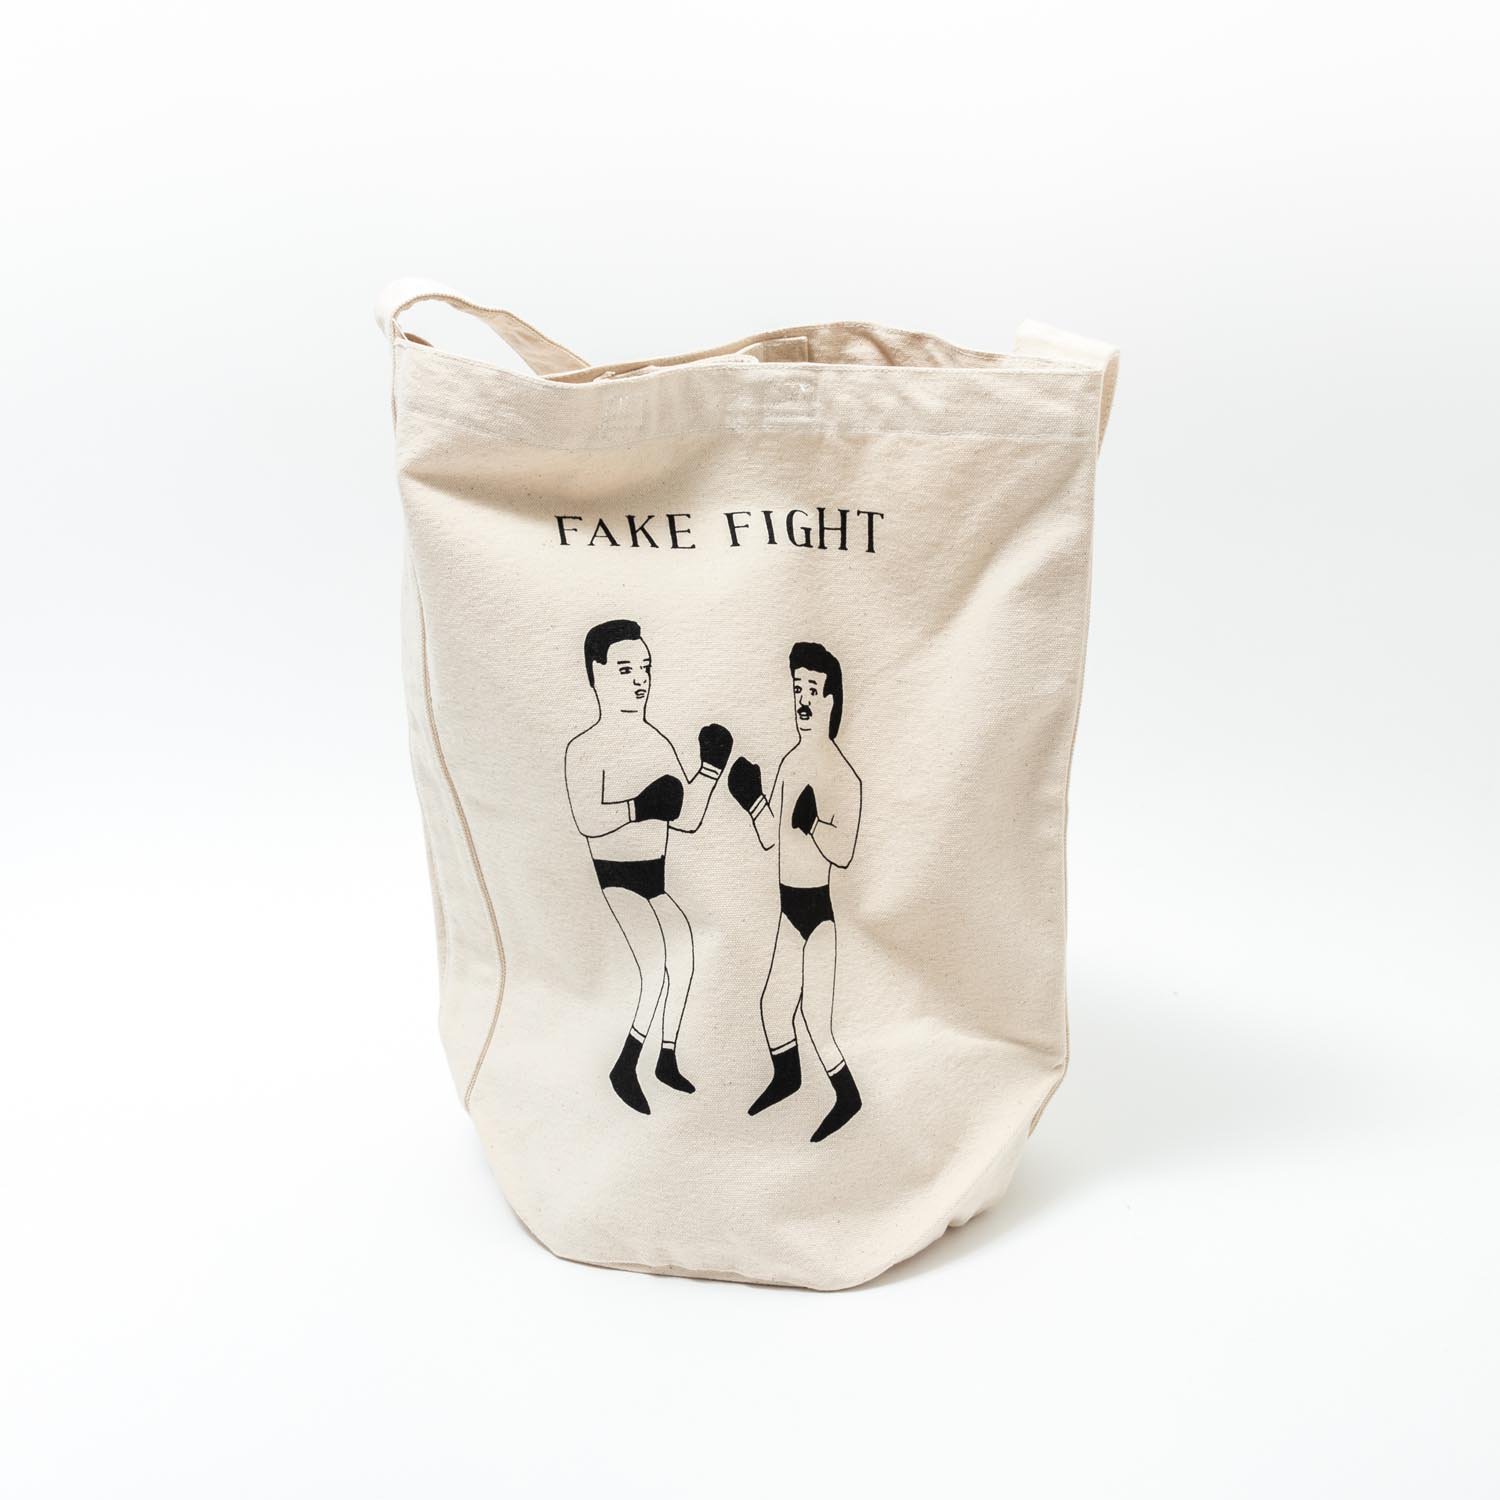 FAKE FIGHT TOTE BAG designed by Tomoo Gokita - TACOMA FUJI RECORDS